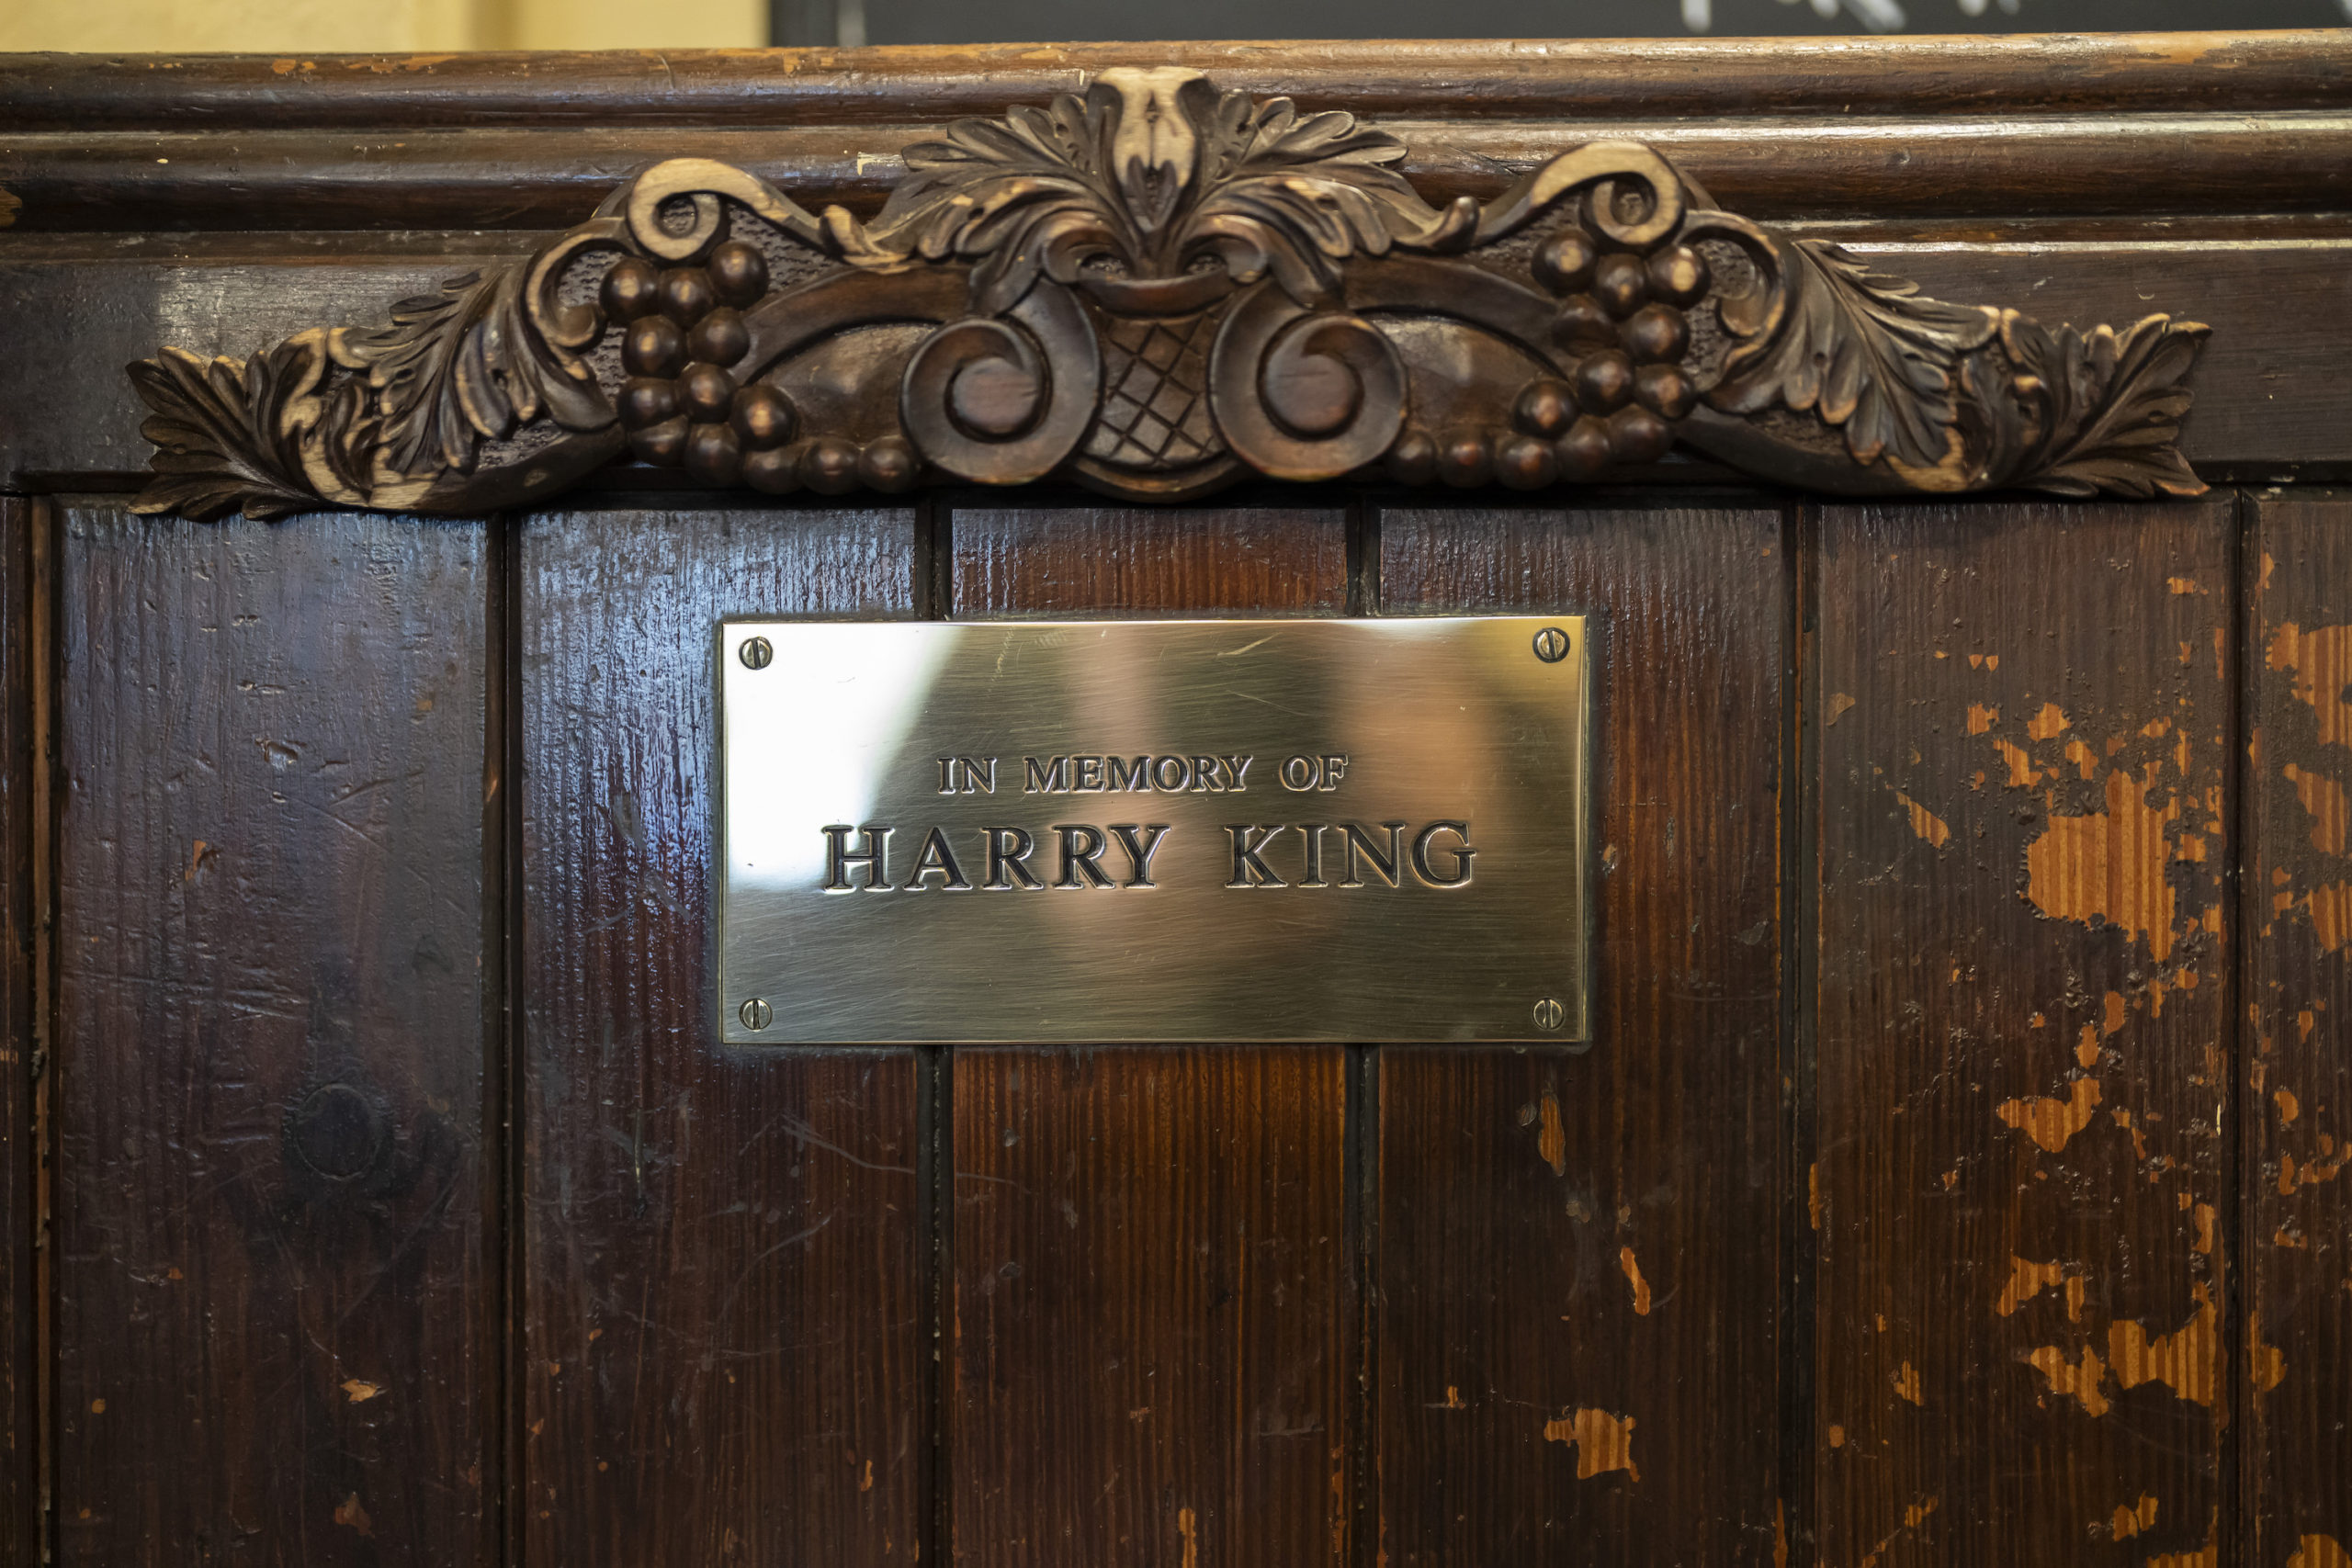 In loving memory of the former owner Harry King